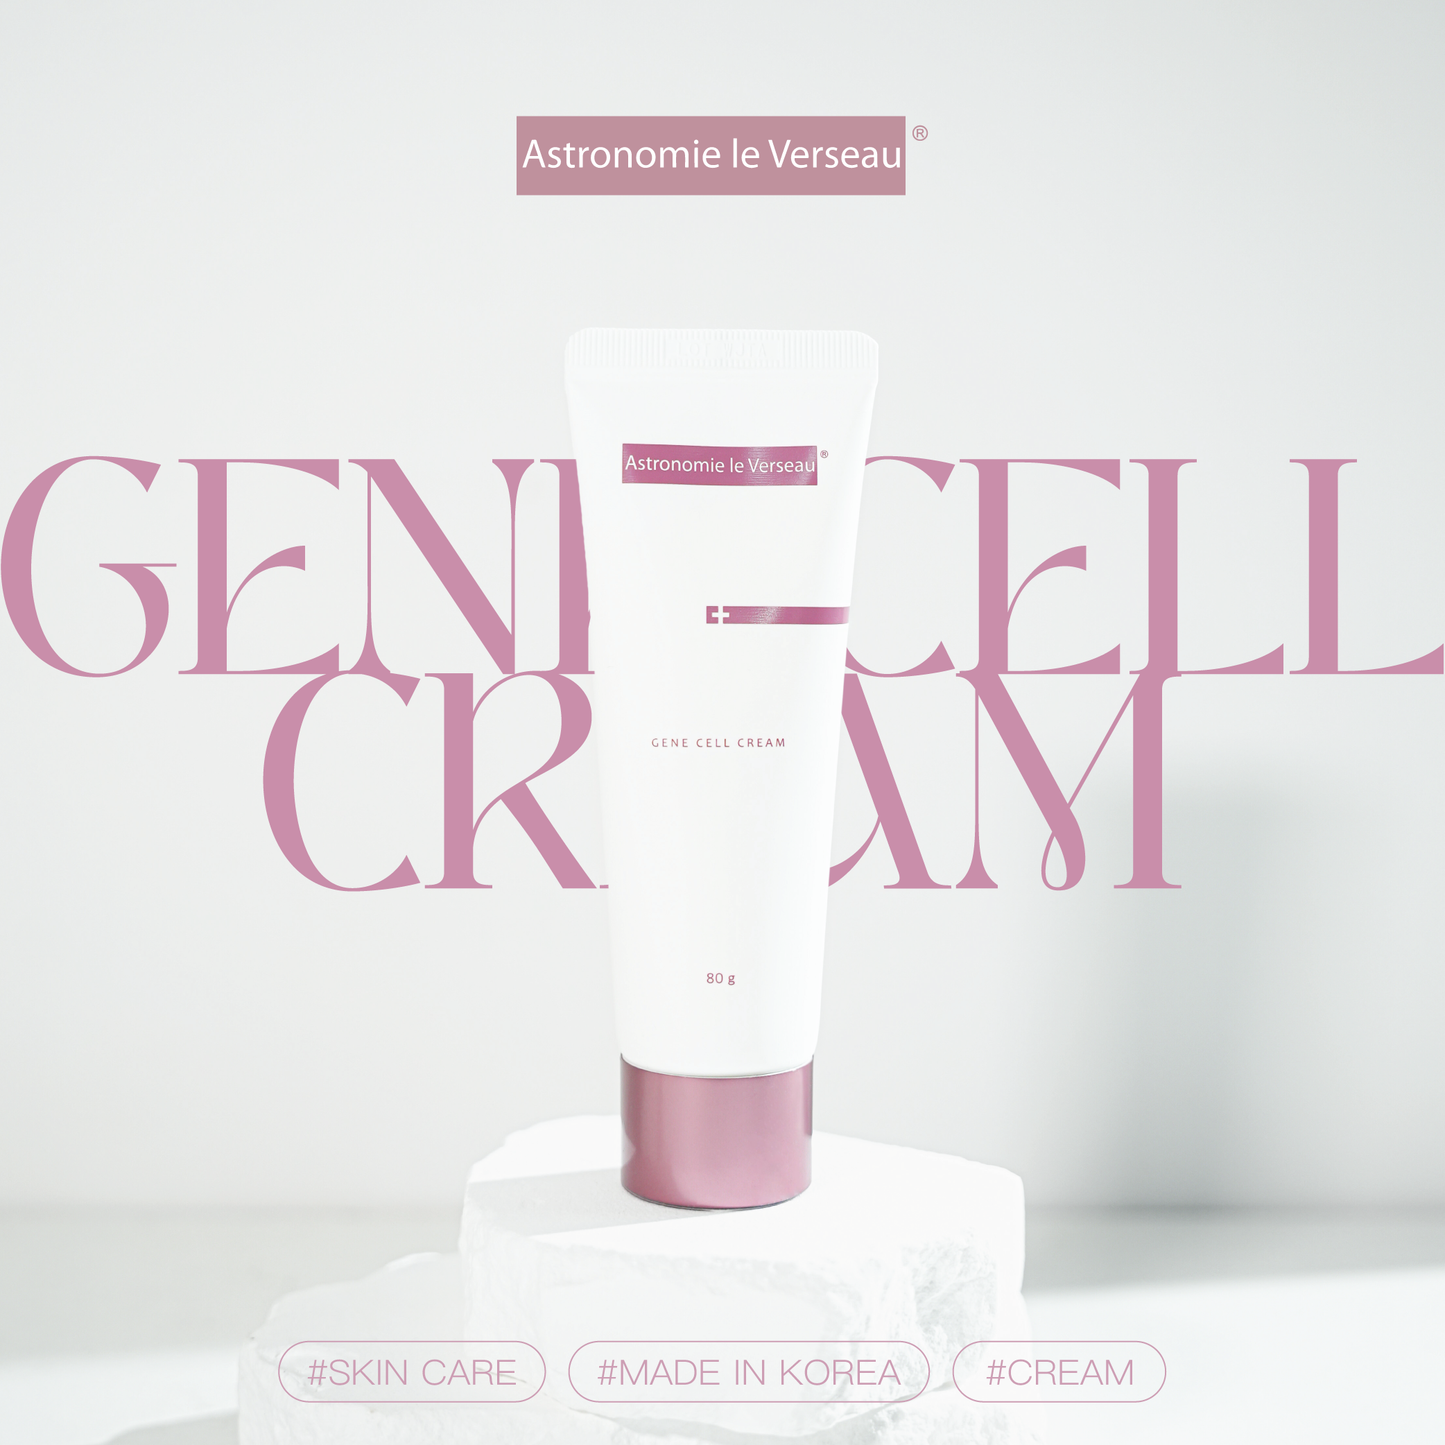 [NEW] 基因修復霜 Gene Cell Cream